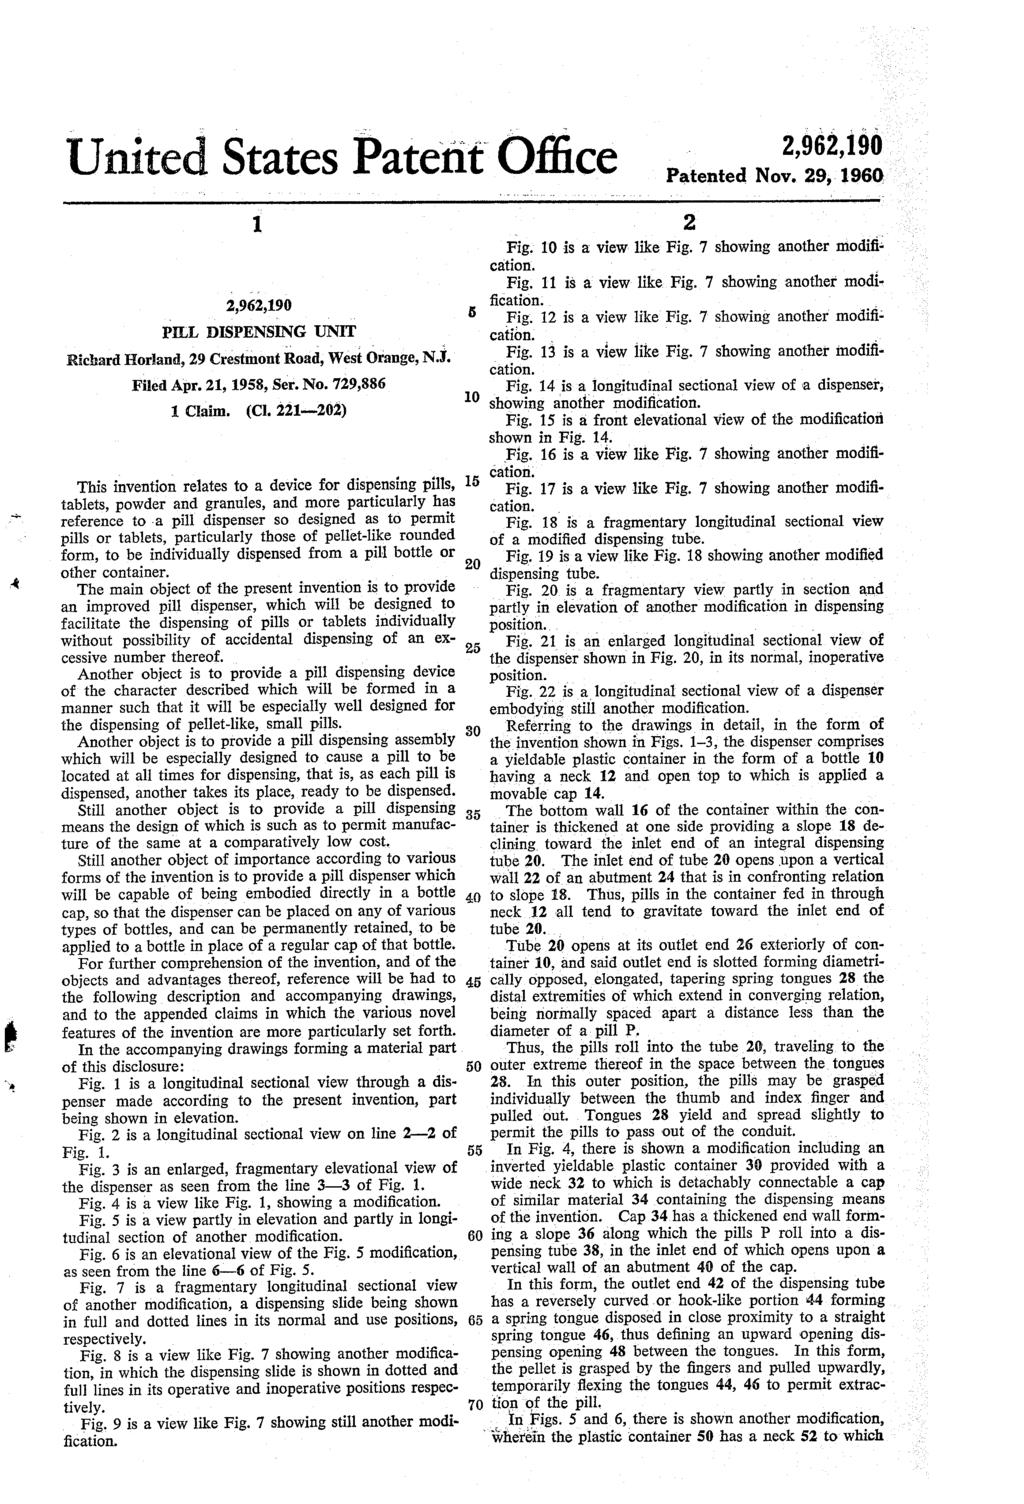 United States Patent ffice Patented Nov. 29, 19 1. Richard Horland, 29 Crestmont Road, West range, N.J. Filed Apr. 21, 198, Ser. No. 729,886 1. Claim.